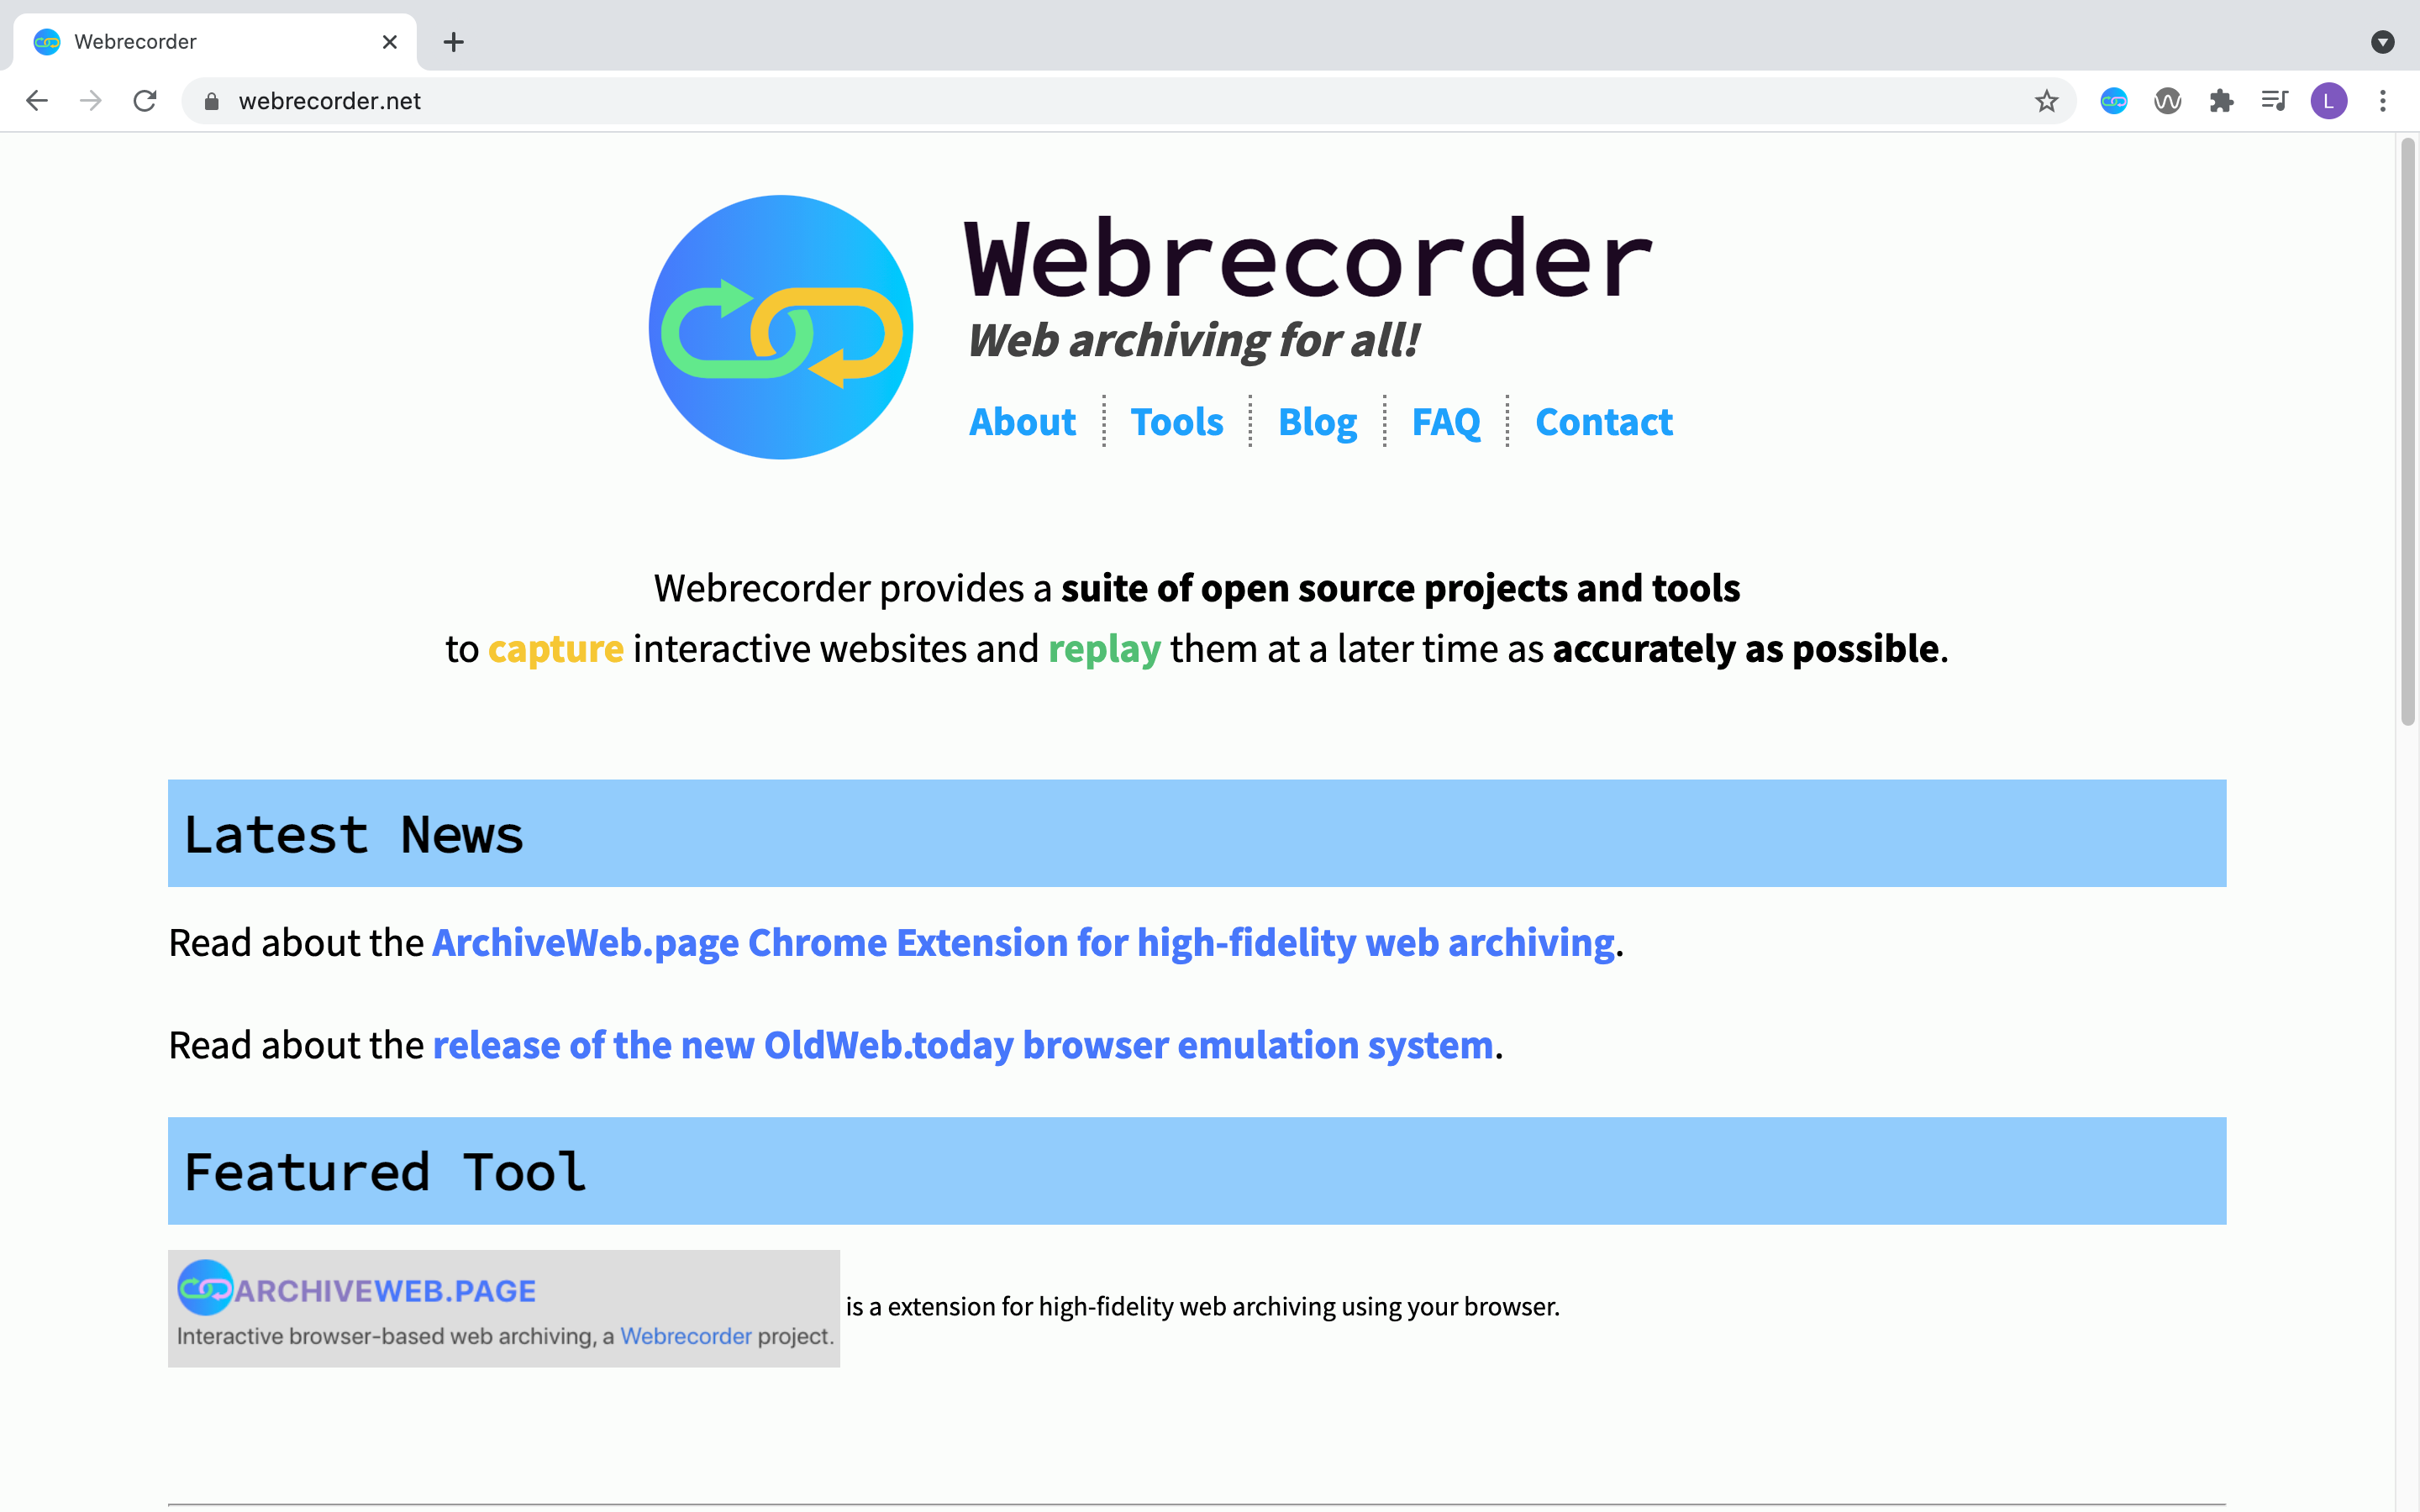 Screenshot of the webrecorder website